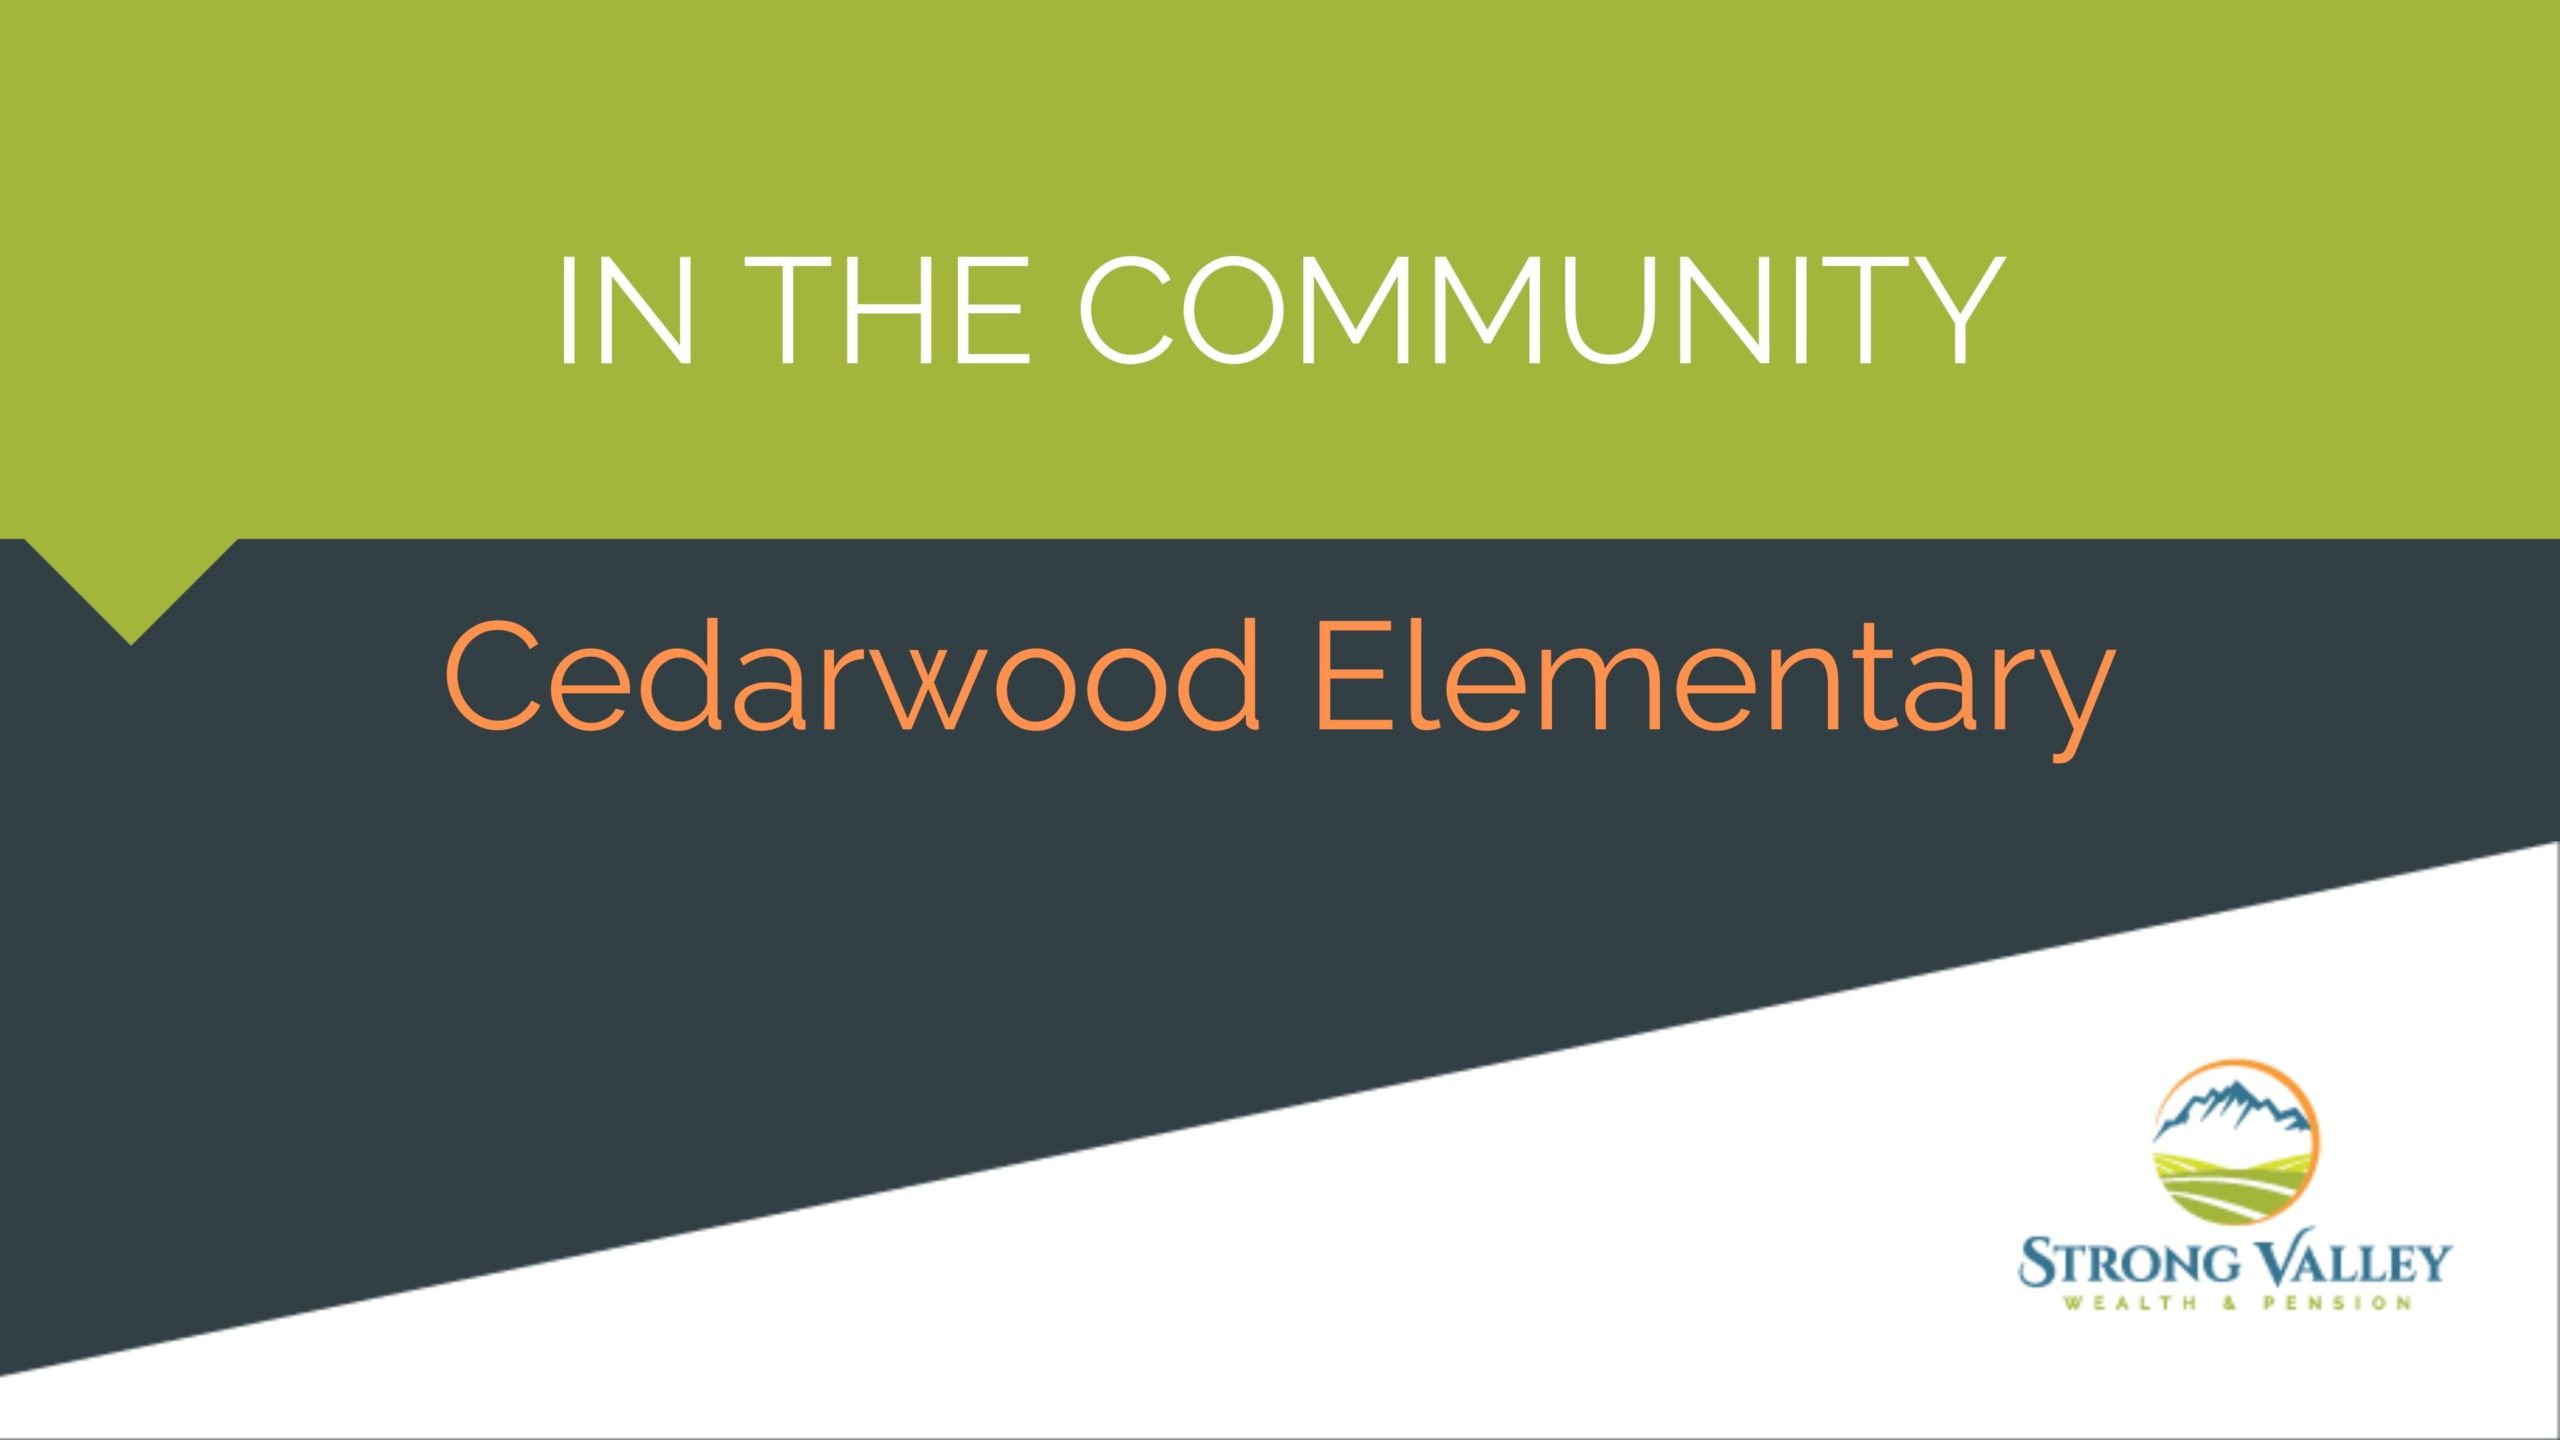 Cedarwood Elementary